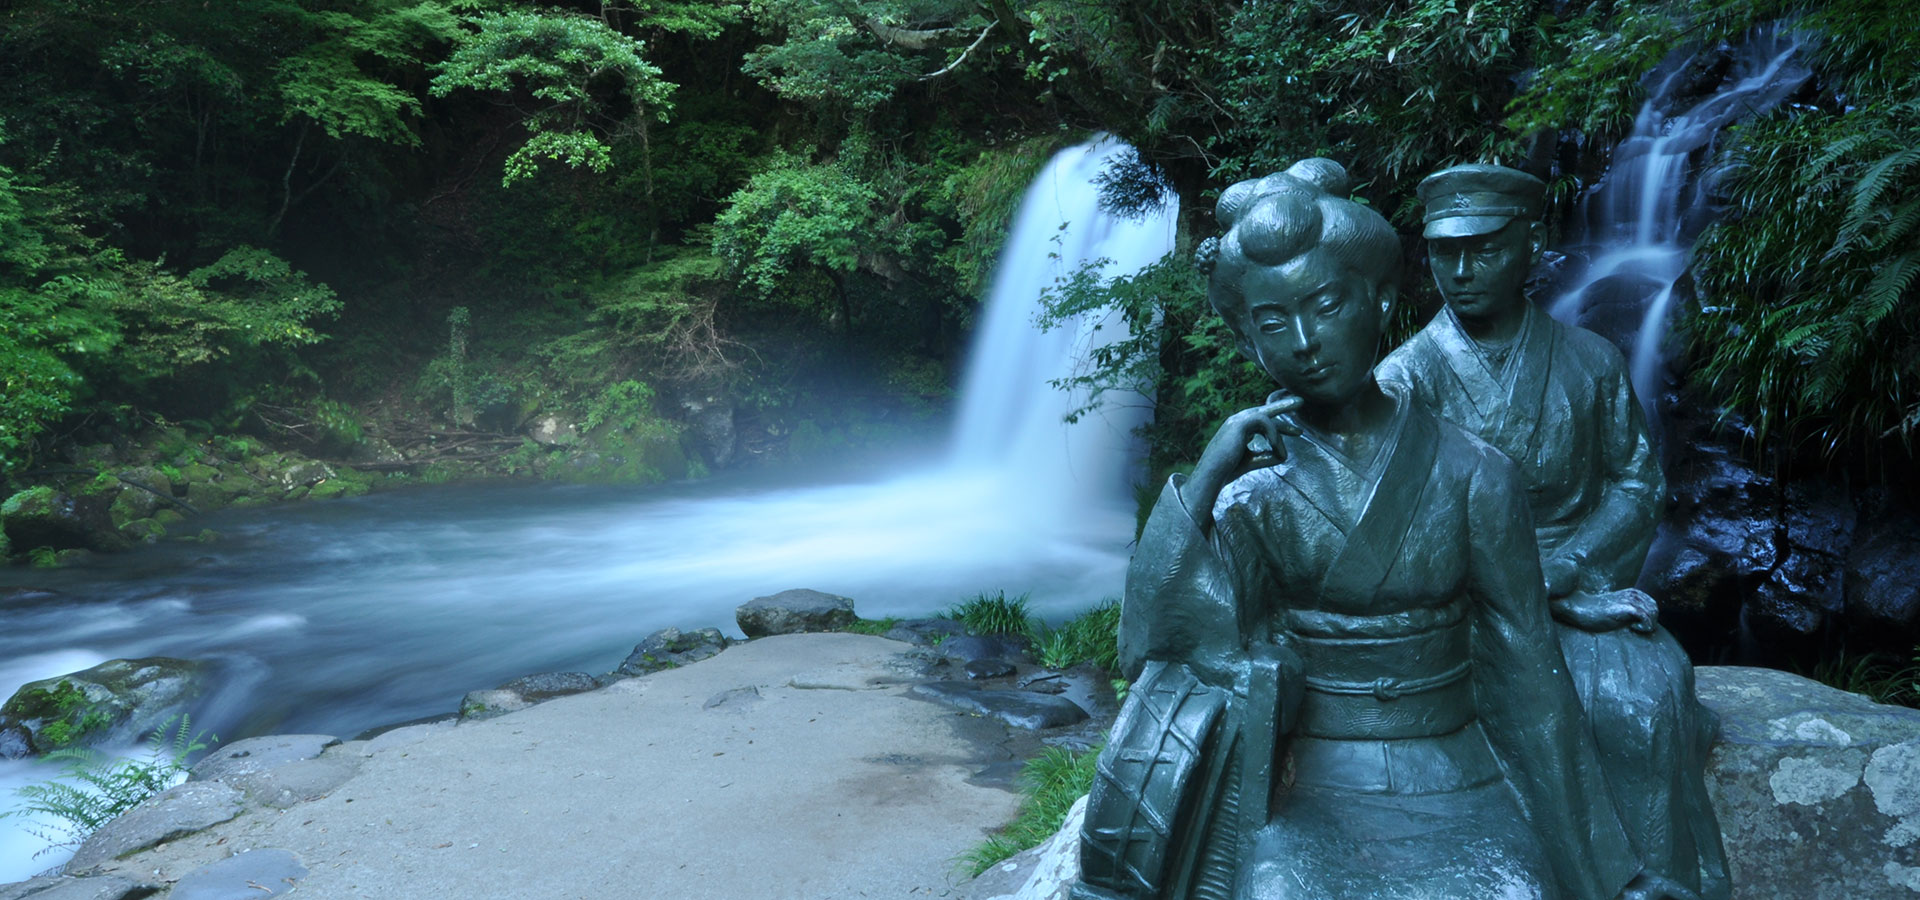 Kawazu Nanadaru(Kawazu 7 waterfalls)